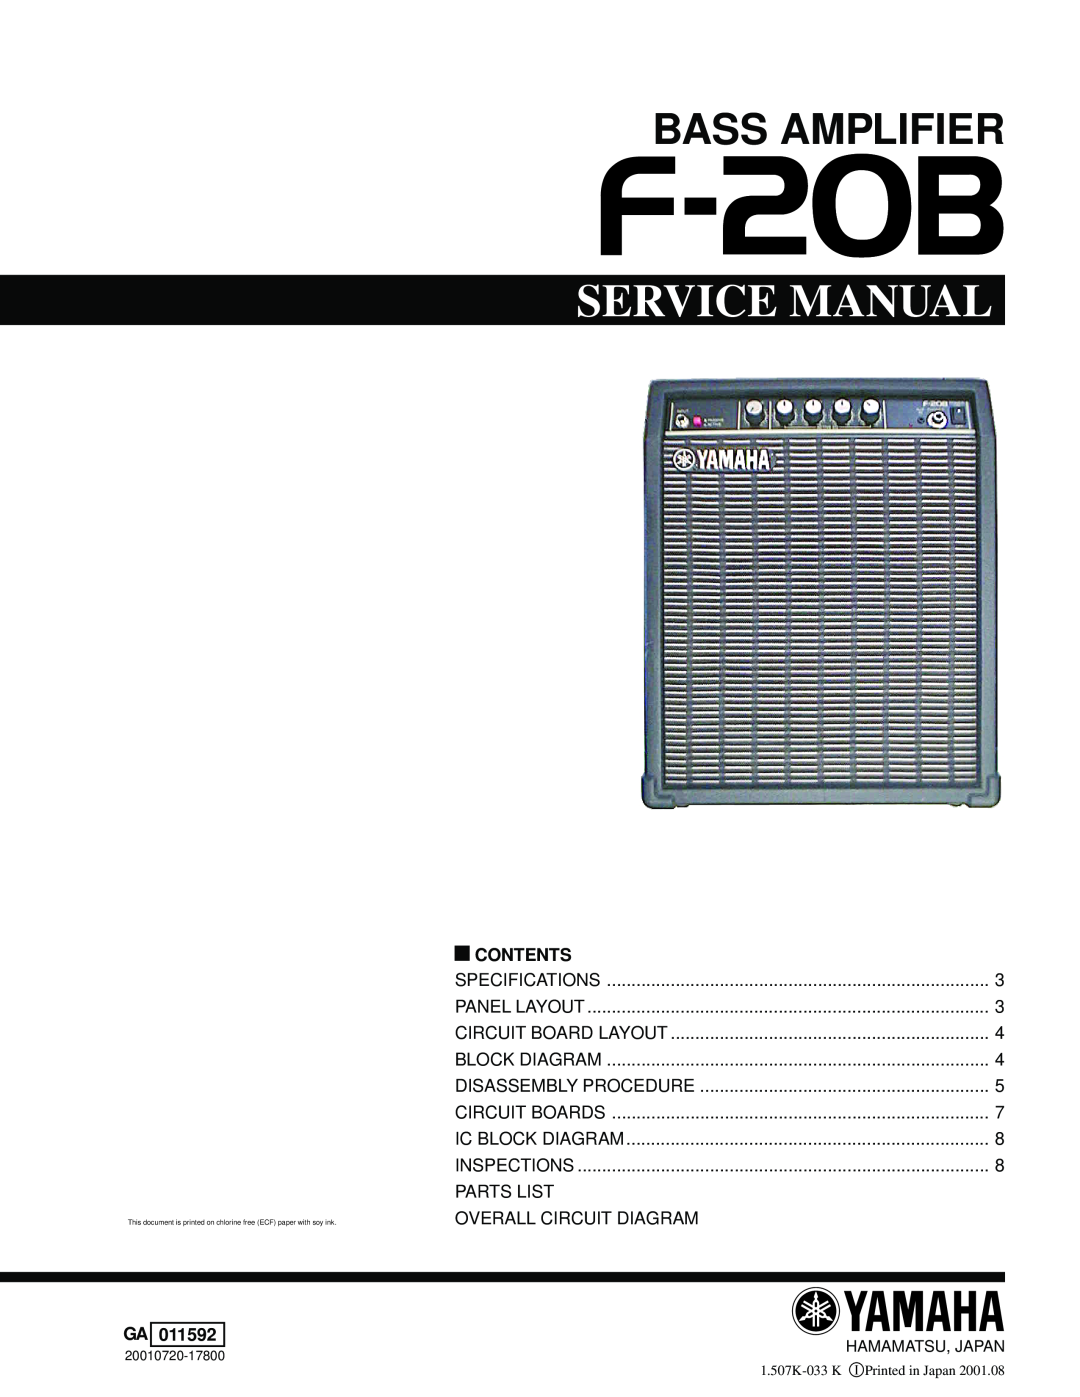 Yamaha Bass Amplifier, F-20B service manual Contents 